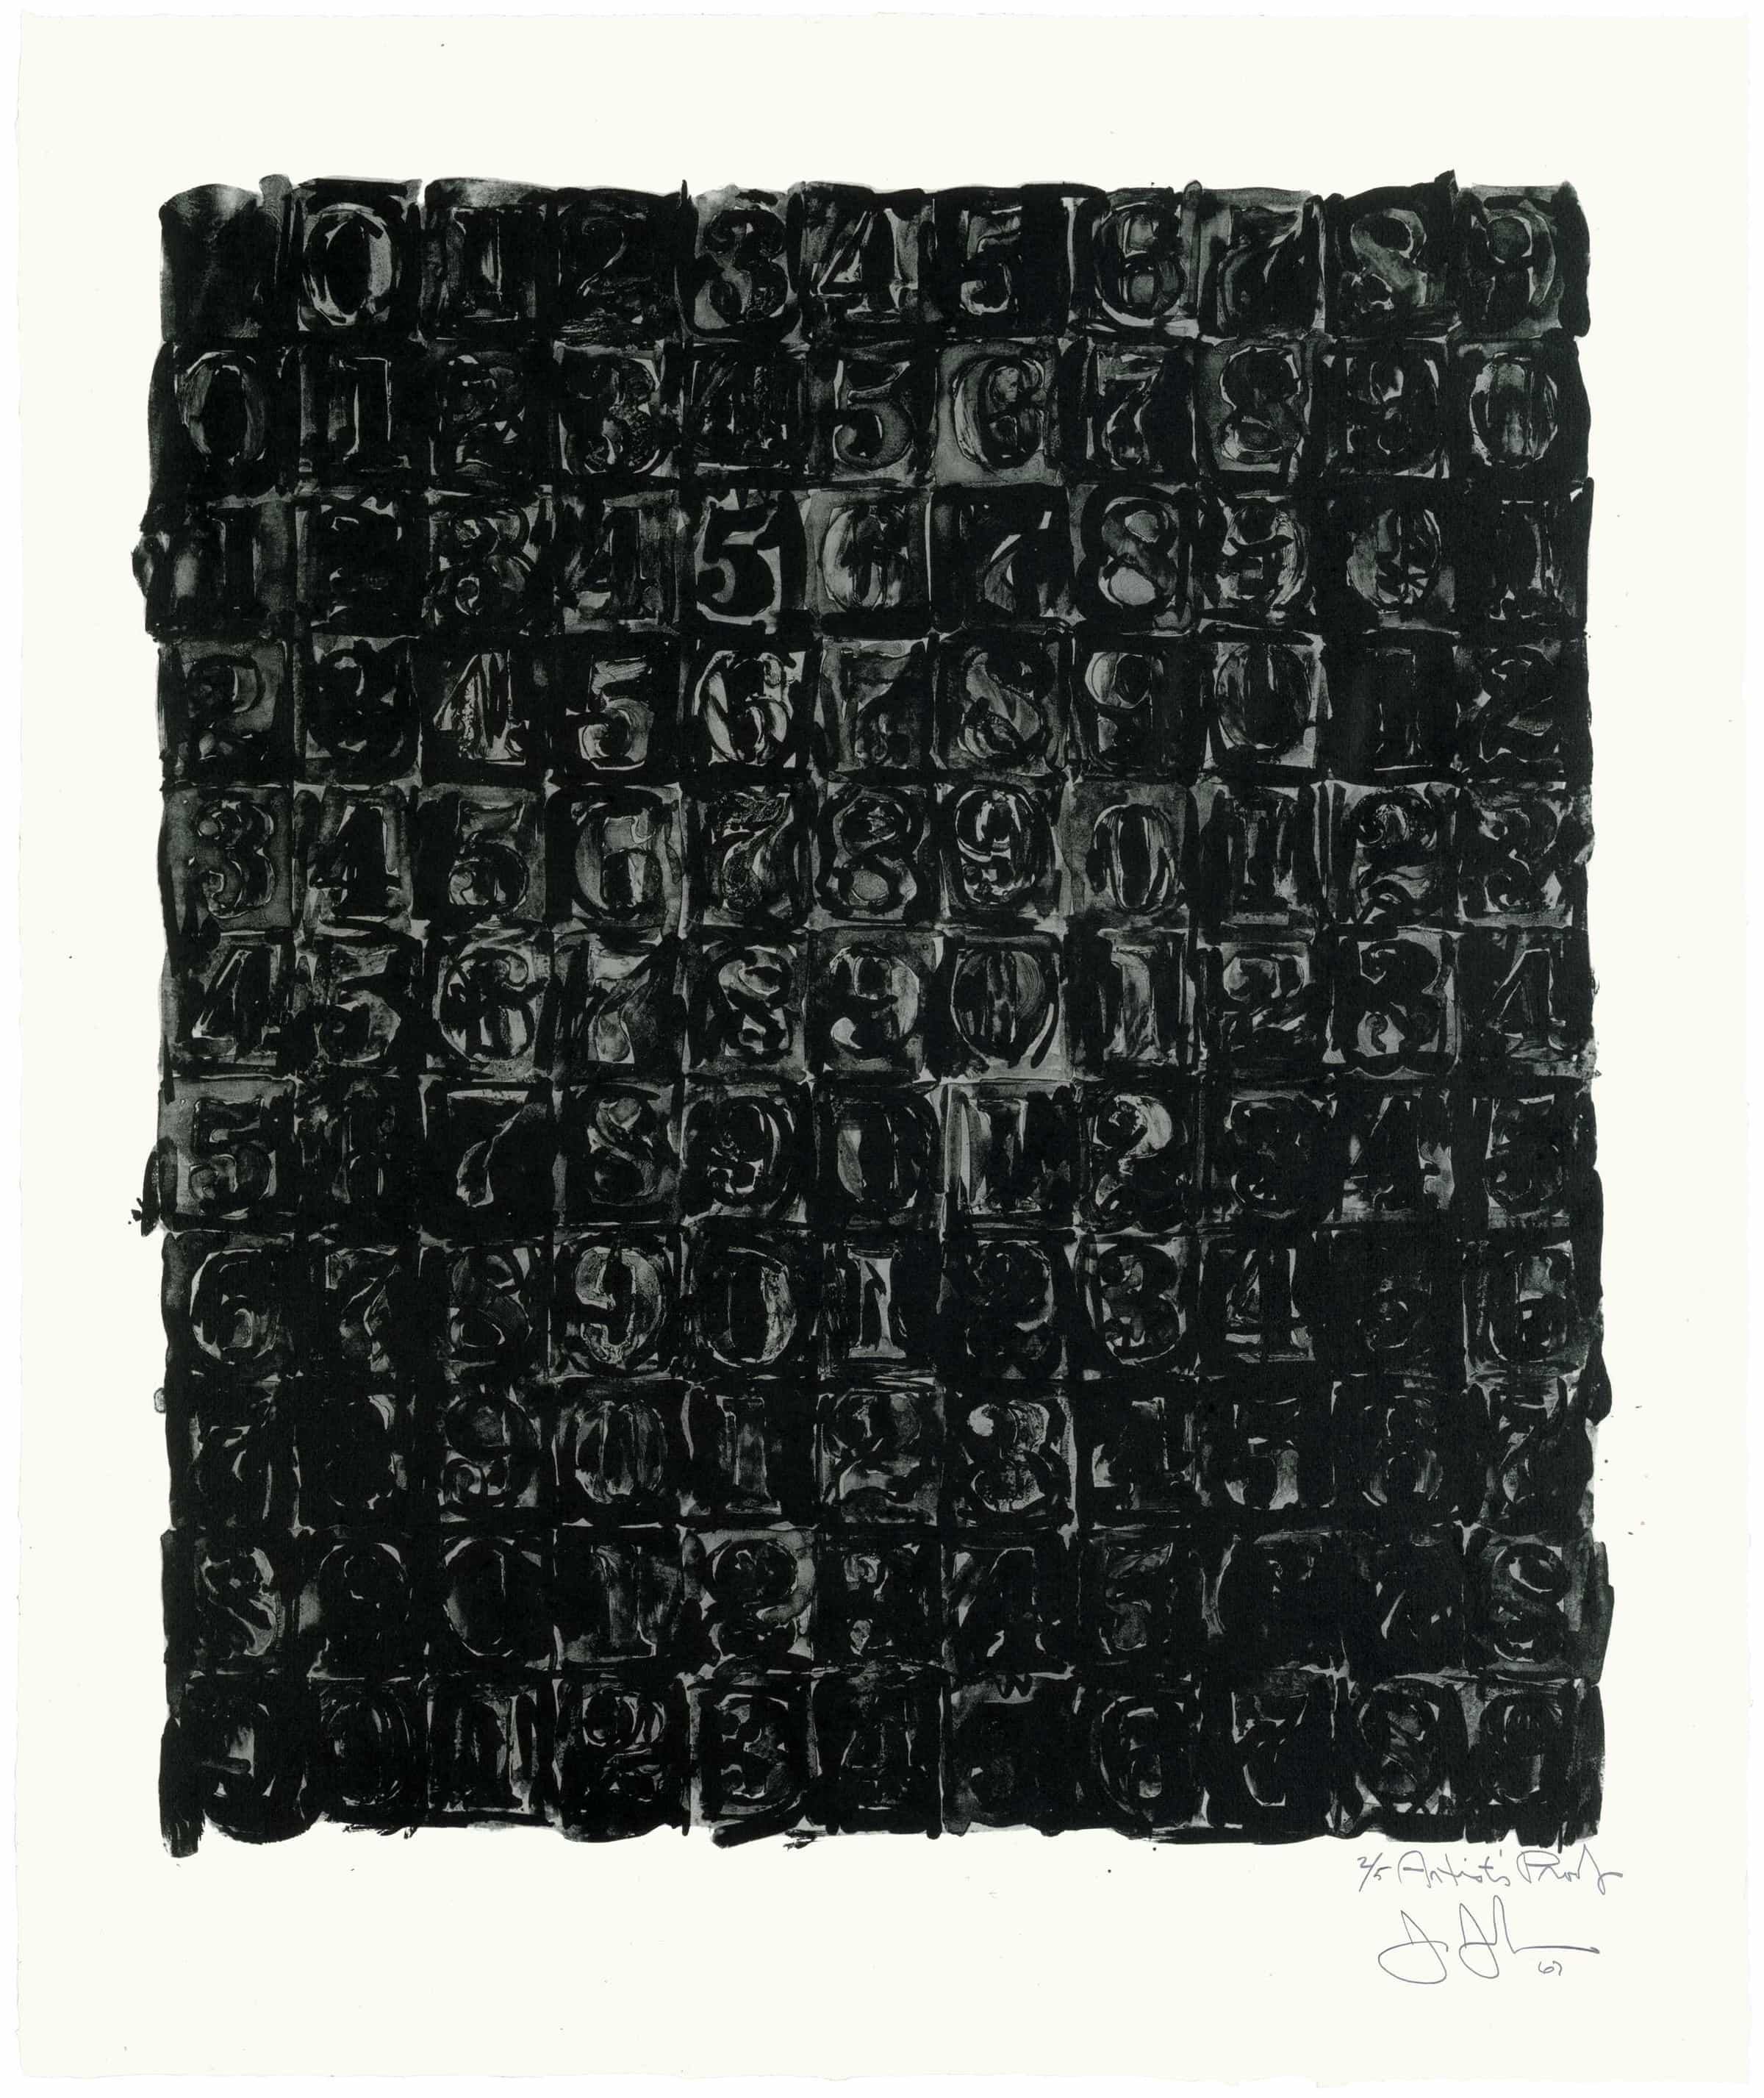 Jasper Johns, Numbers, 1967